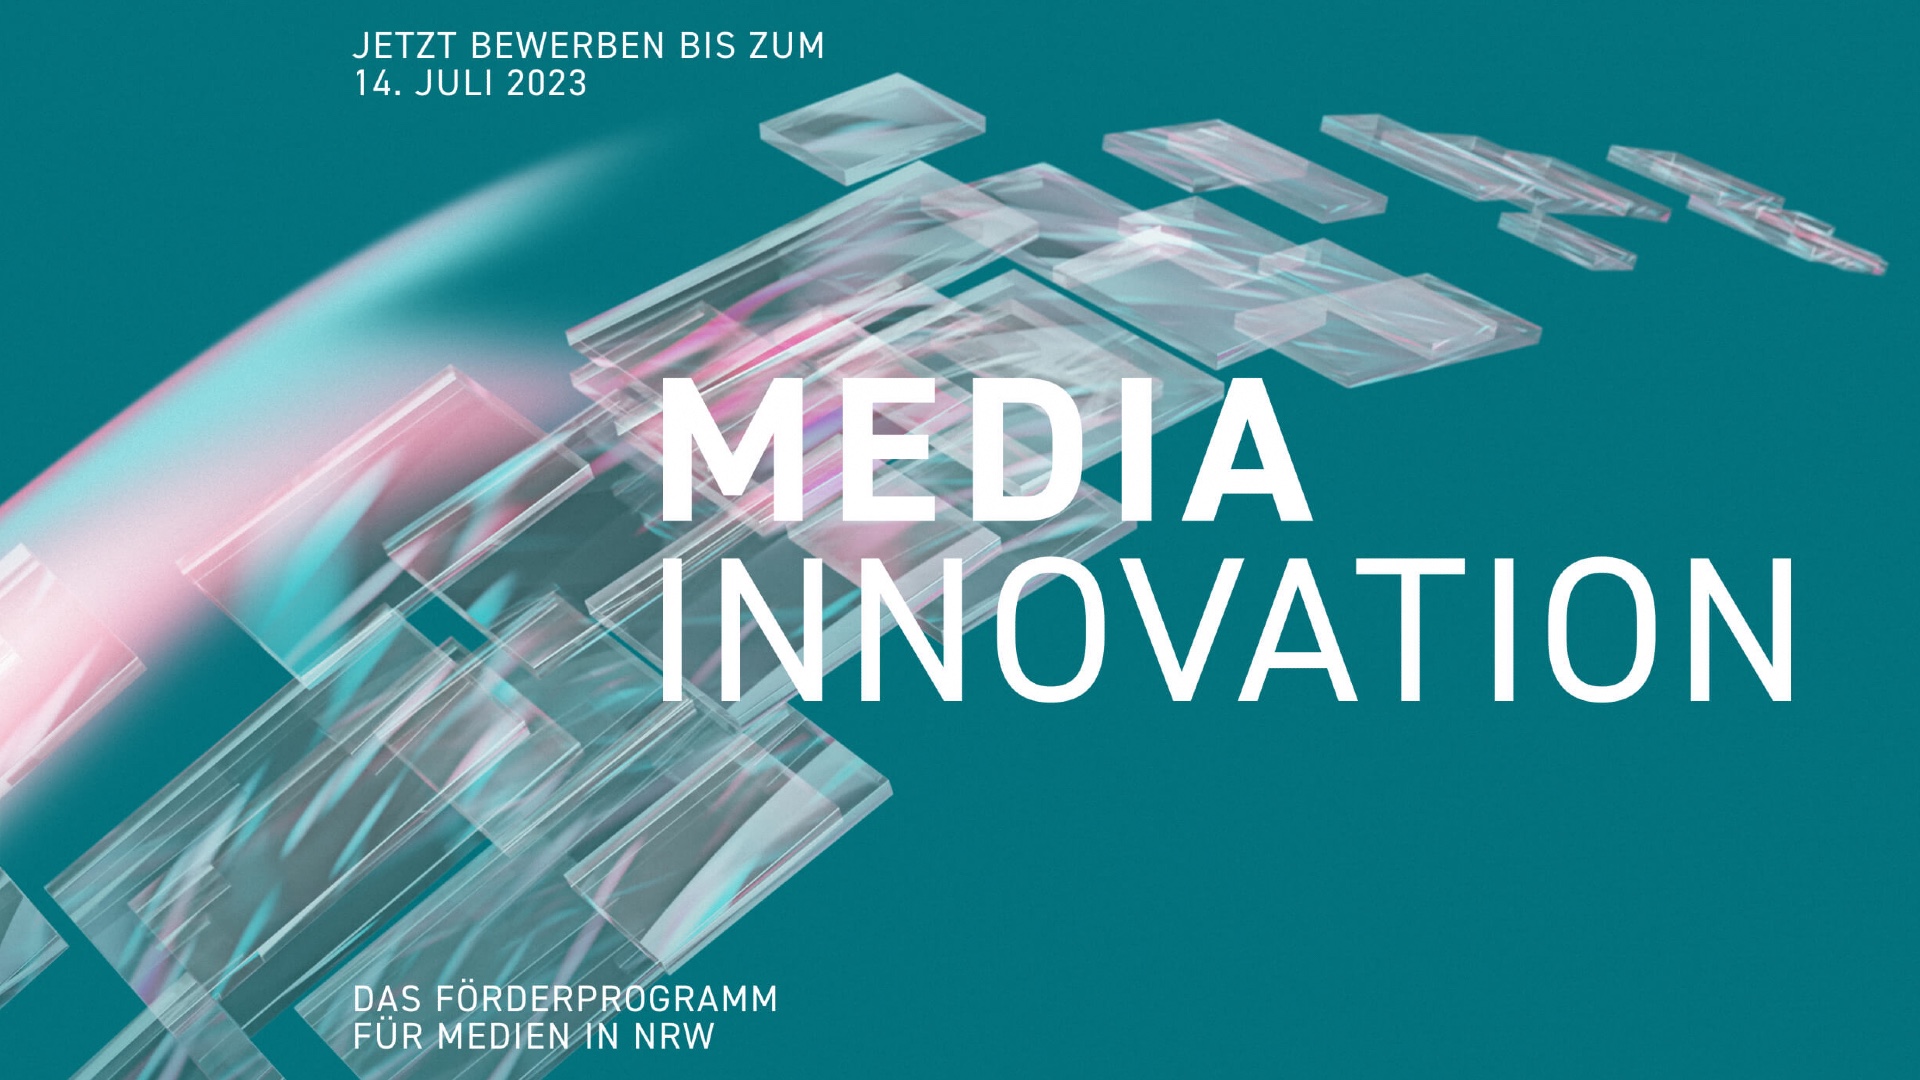 Media Innovation funding program: Your springboard for media innovations in NRW